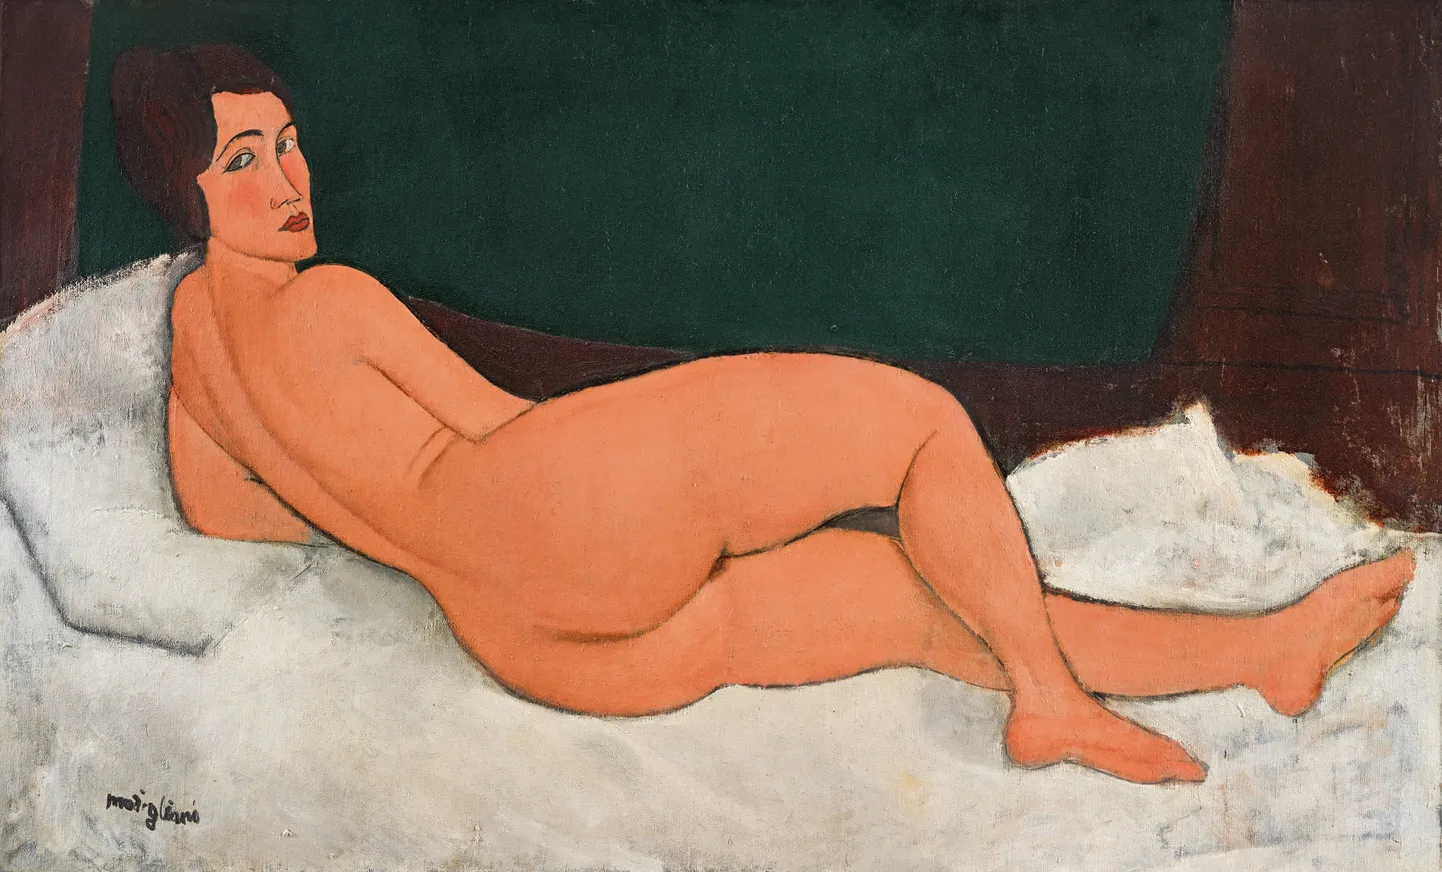 Amedeo Modigliani aktimaal «Nu couché»